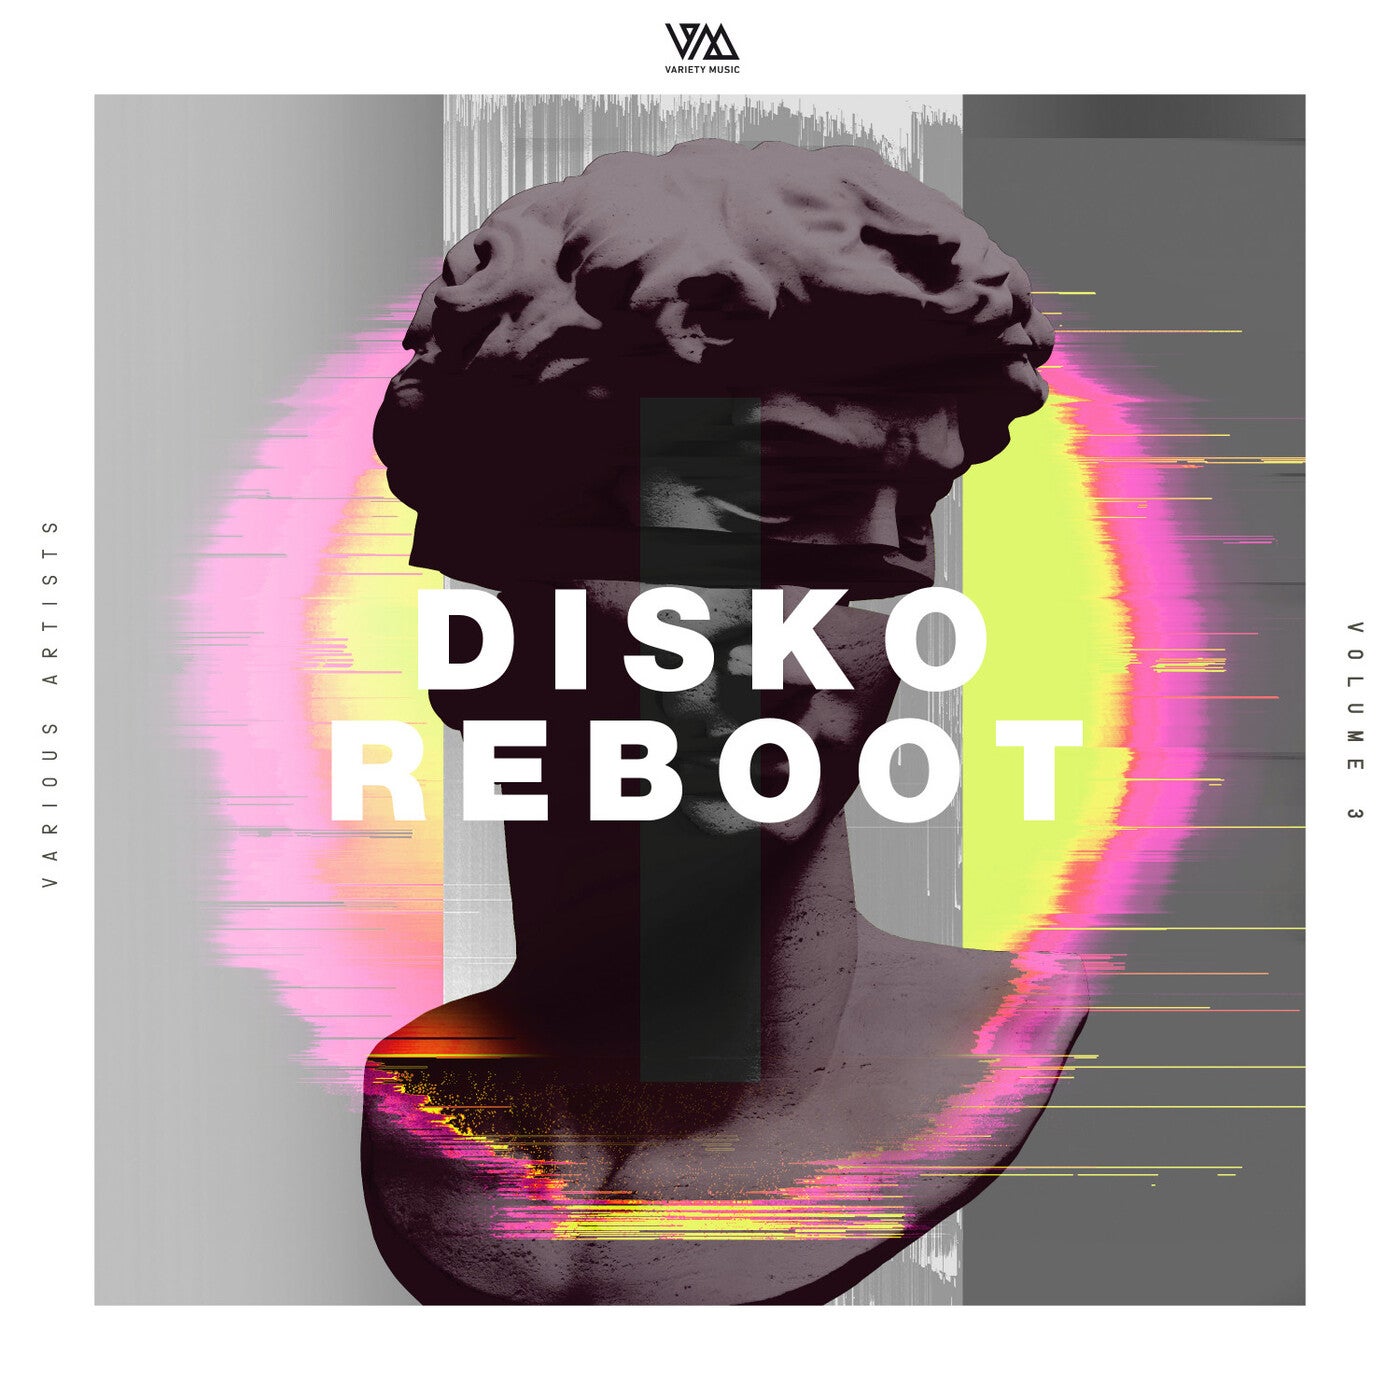 VA - Disko Reboot, Vol. 3 [VMCOMP847]